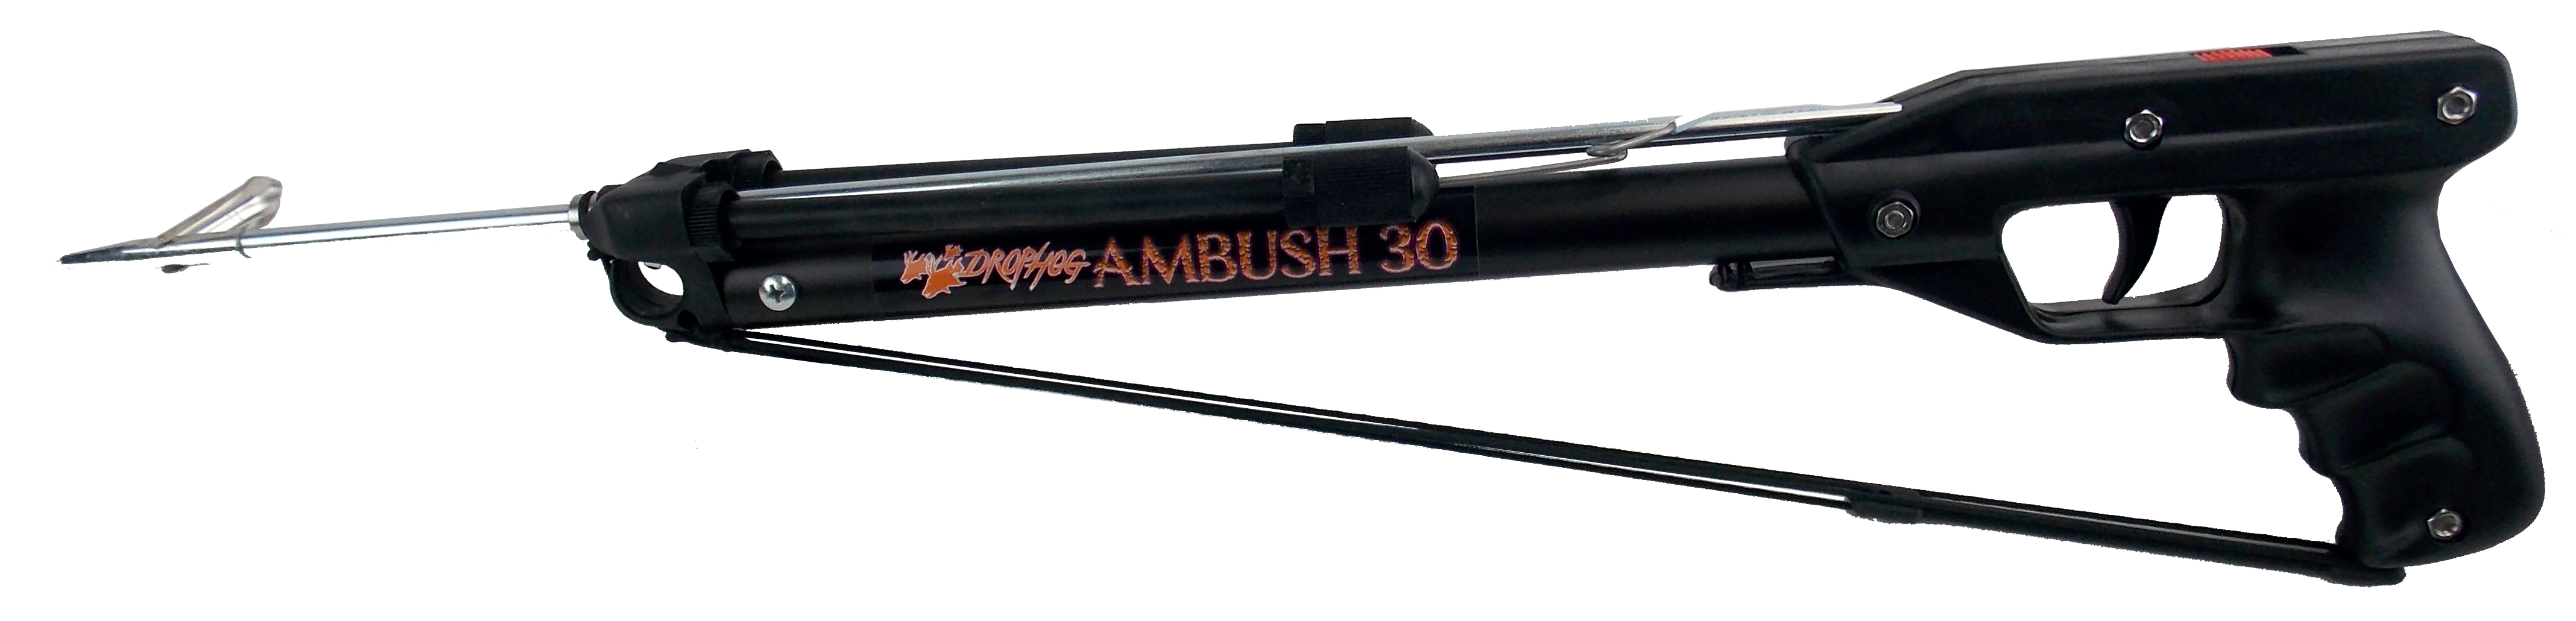 Drophog™ Spearfishing Ambush 30 Series - Micro Speargun - SA